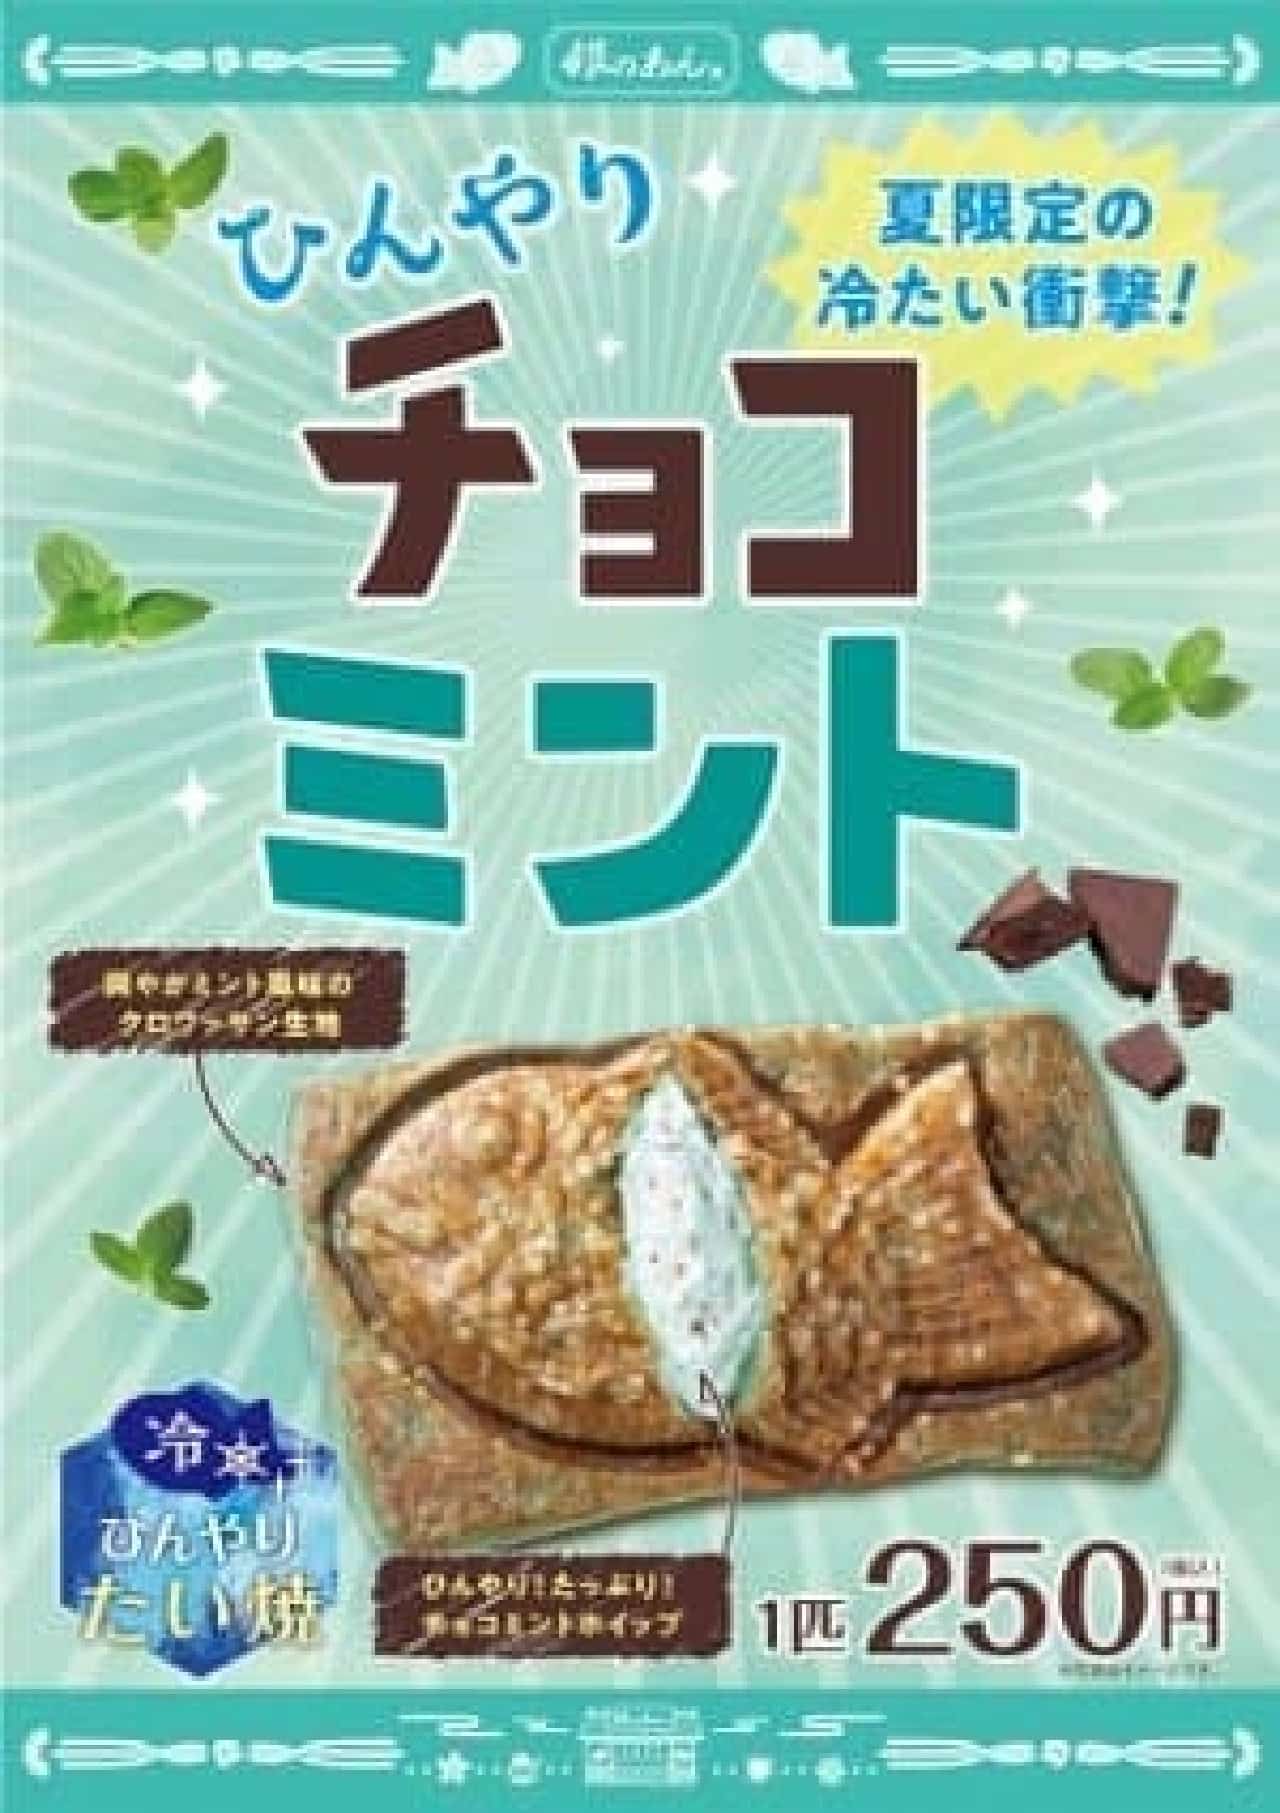 Silver bean paste croissant Taiyaki "cool chocolate mint"